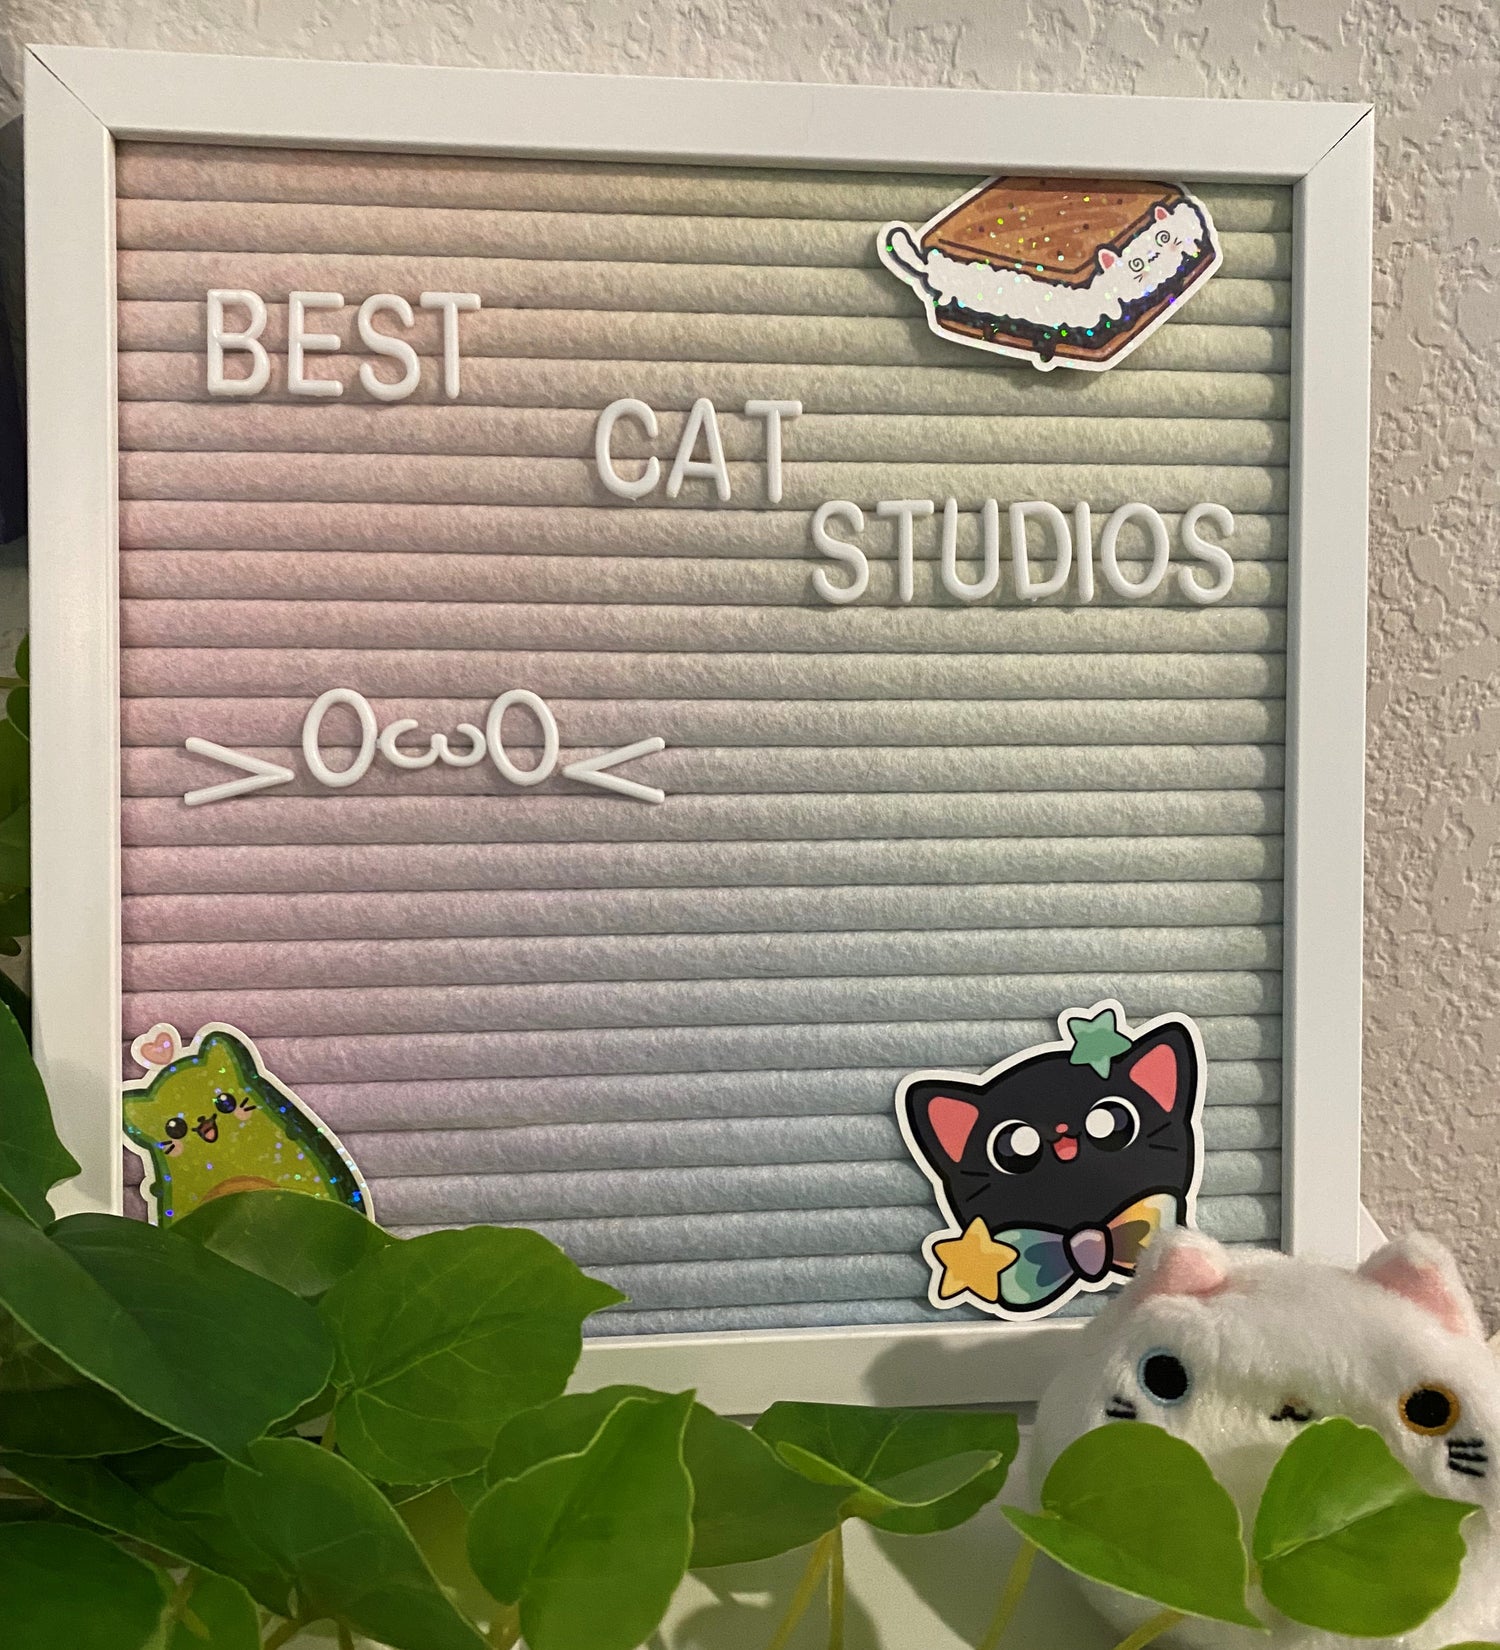 Best Cat Studios - Cat Stickers and Stationery – BestCatStudios